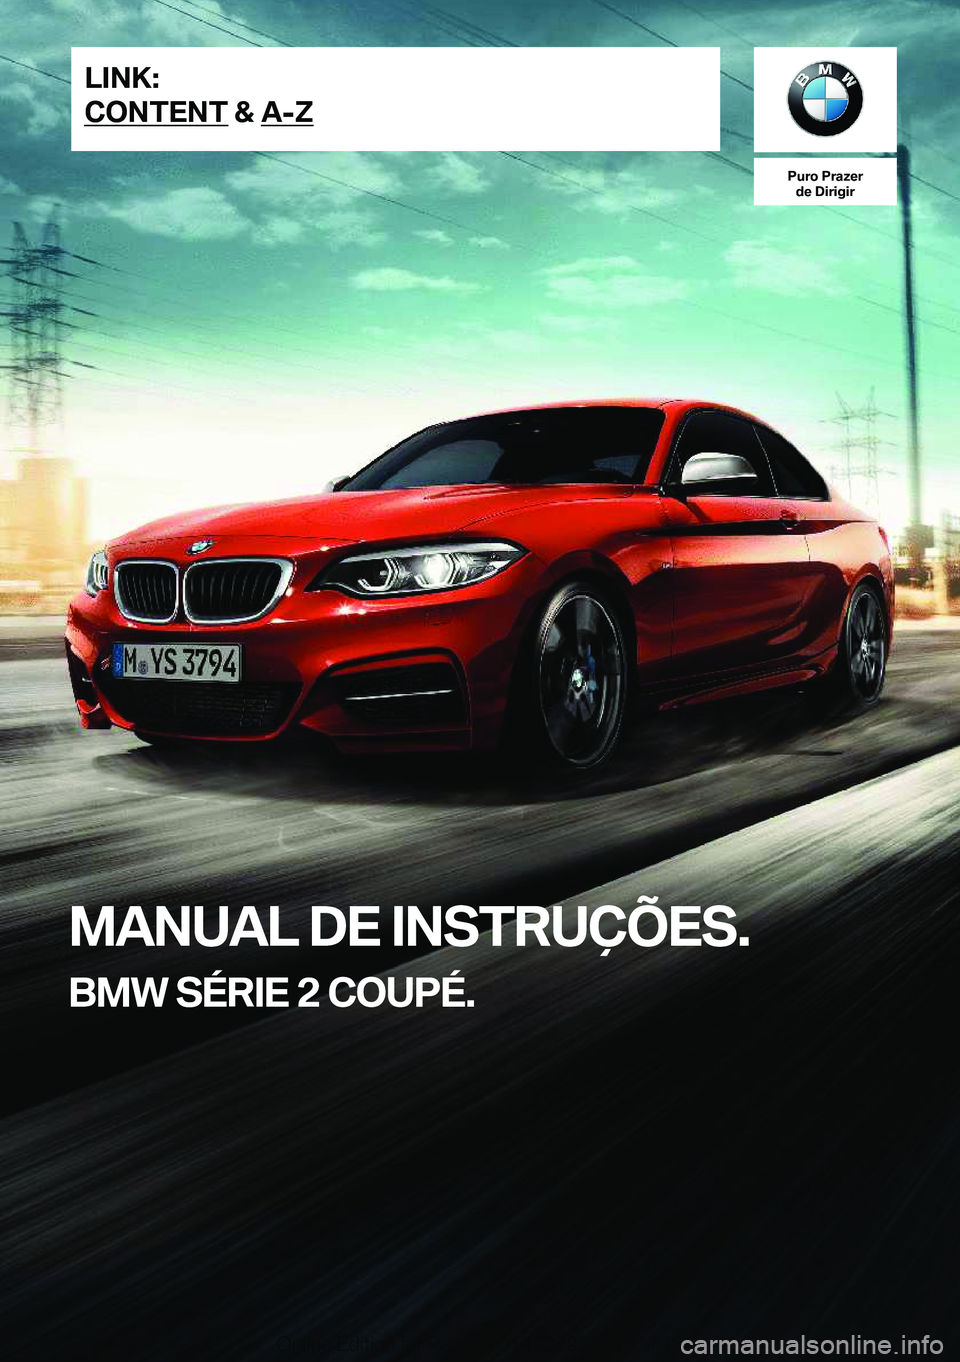 BMW 2 SERIES COUPE 2019  Manual do condutor (in Portuguese) �P�u�r�o��P�r�a�z�e�r�d�e��D�i�r�i�g�i�r
�M�A�N�U�A�L��D�E��I�N�S�T�R�U�